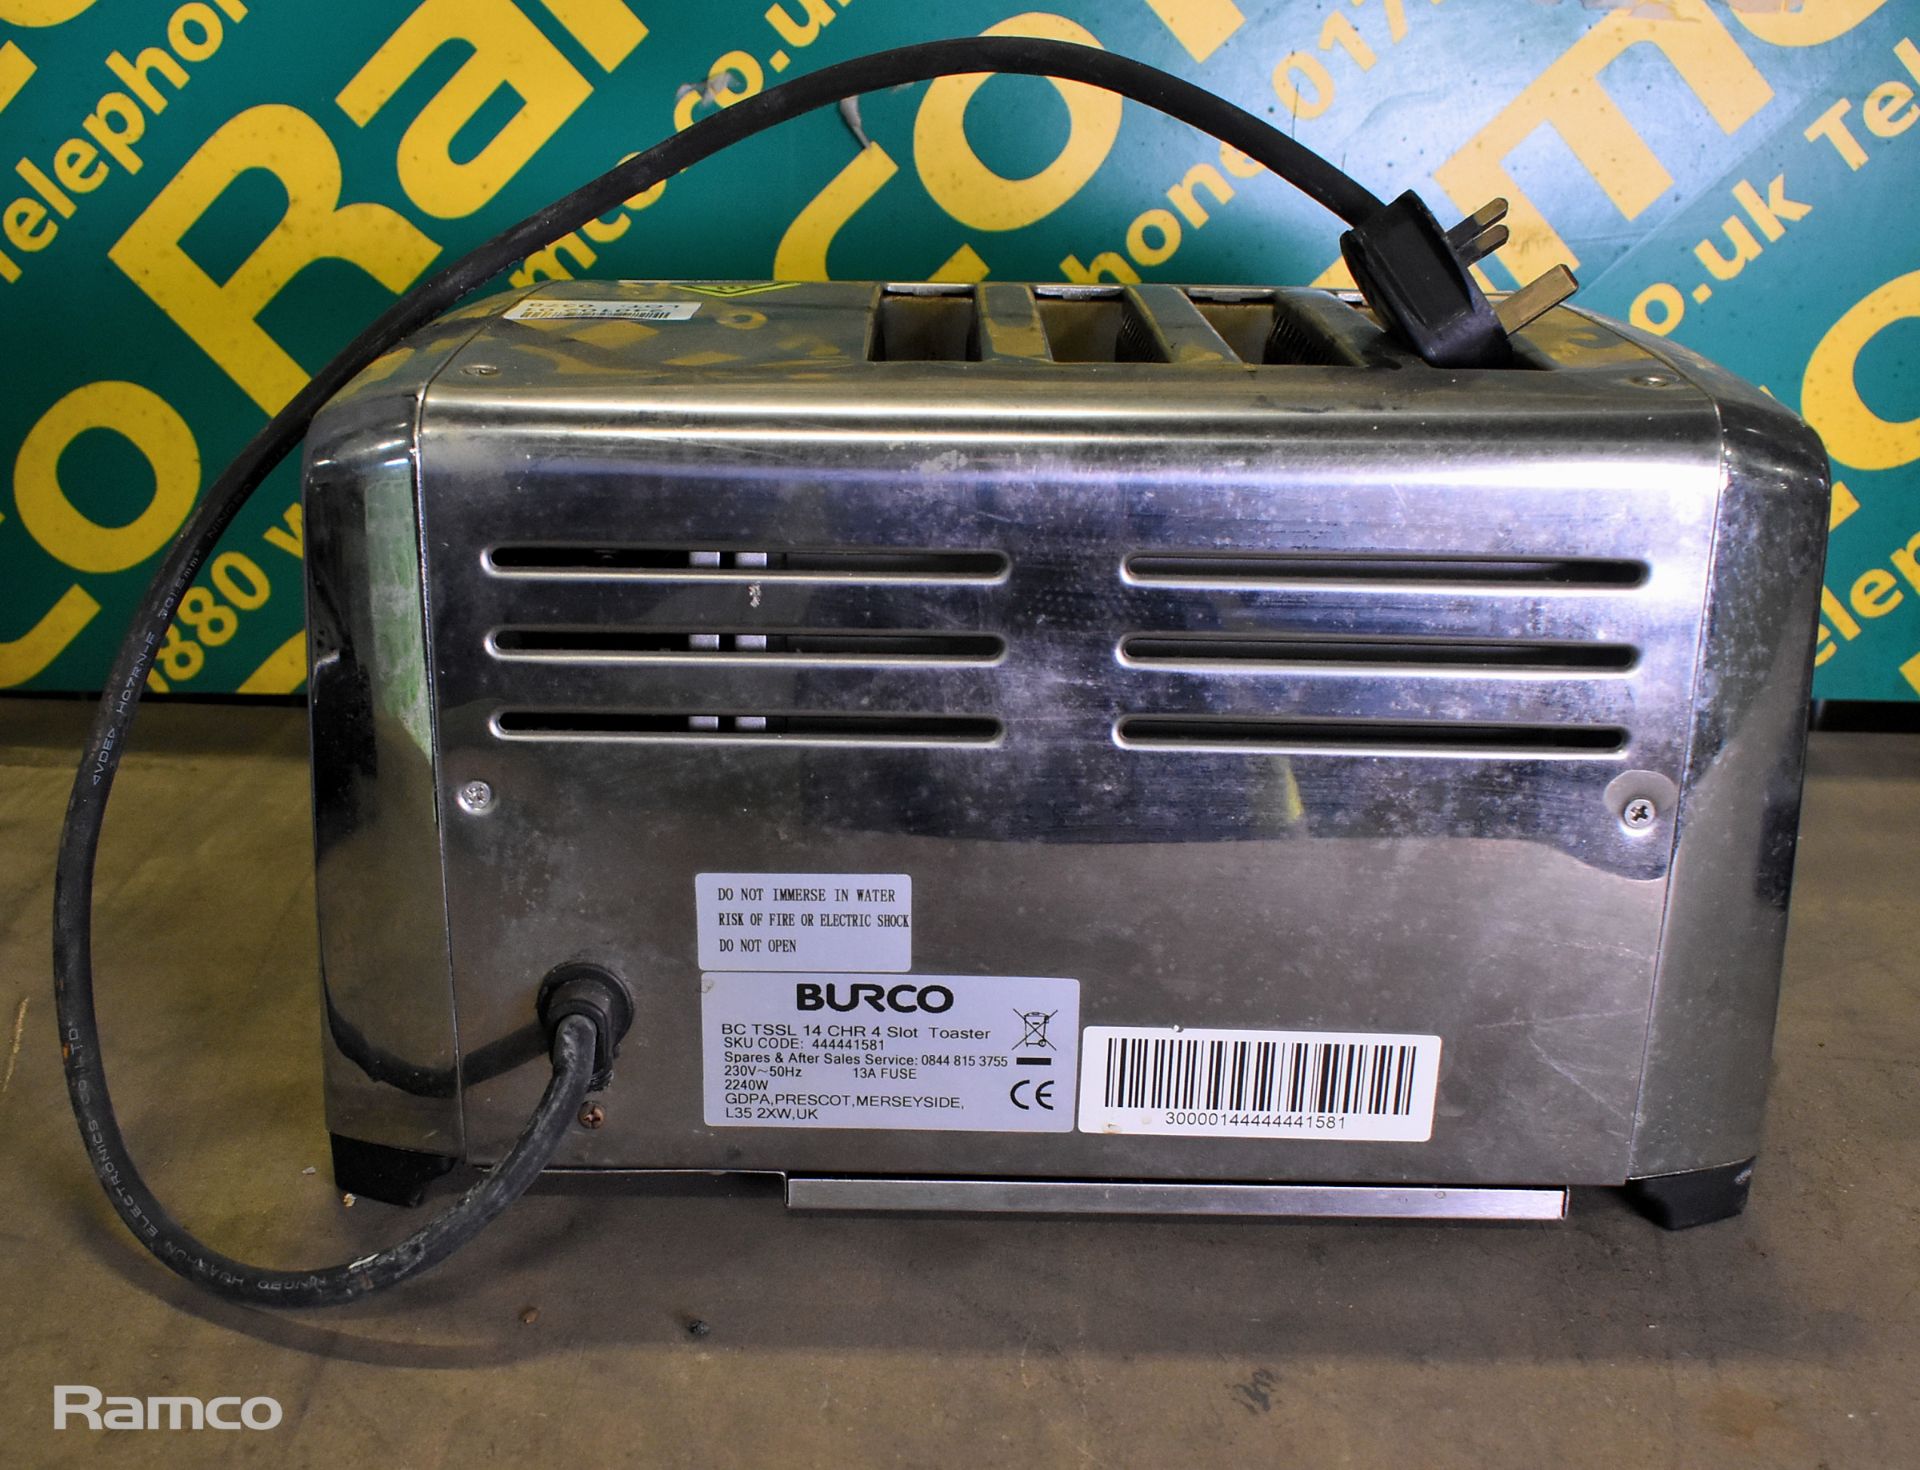 Burco BC TSSL 14 CHR 4 stainless steel 4 slot toaster - Image 4 of 5